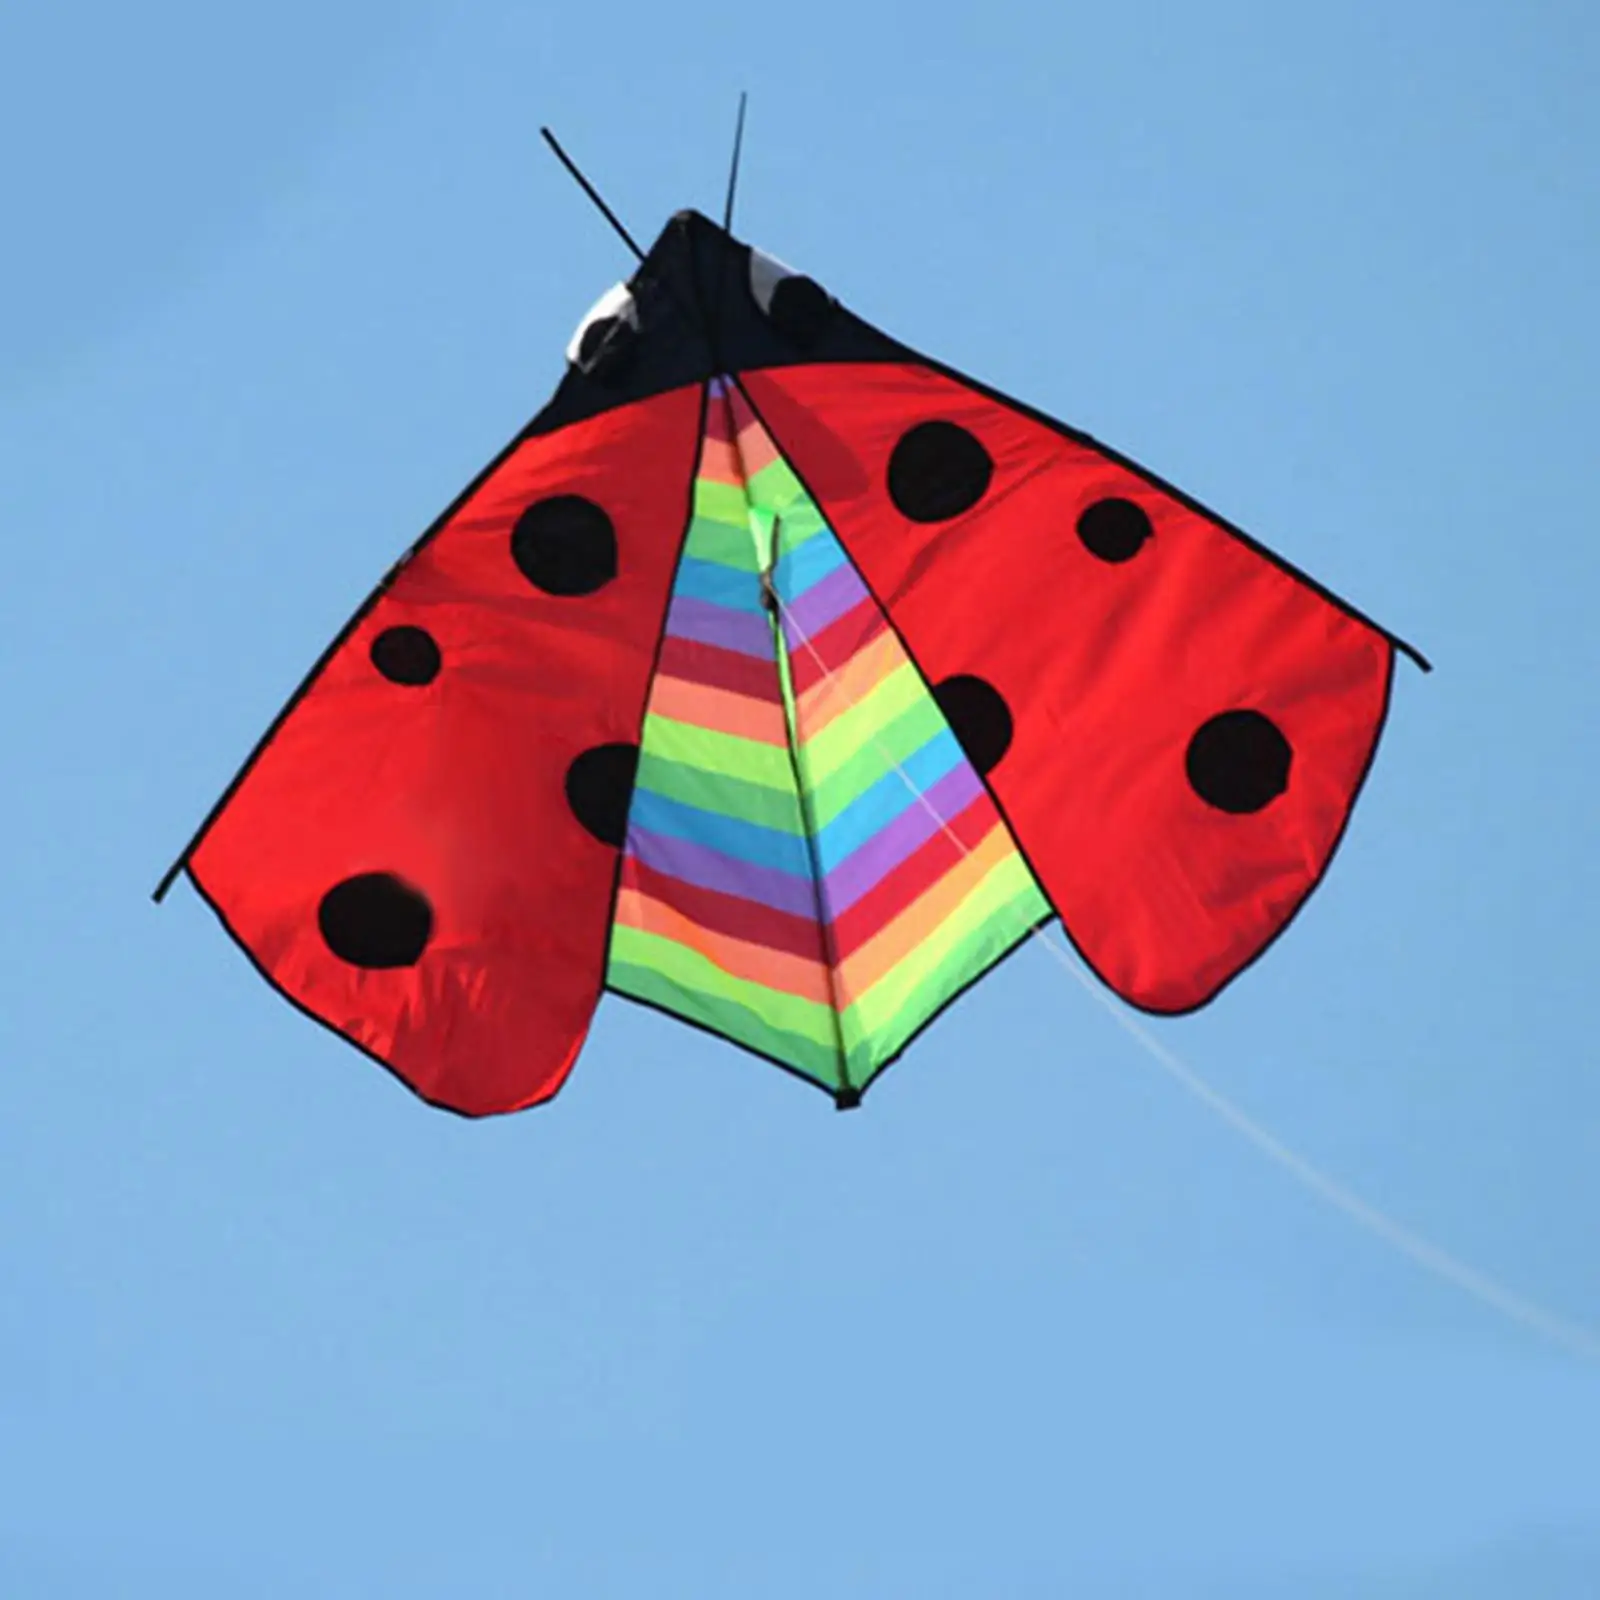 Foldable Delta Kite Fly Kite Single-Line Easy Control Windsock Huge Wingspan Flying Toys Large Triangle Ladybug Kite for Garden